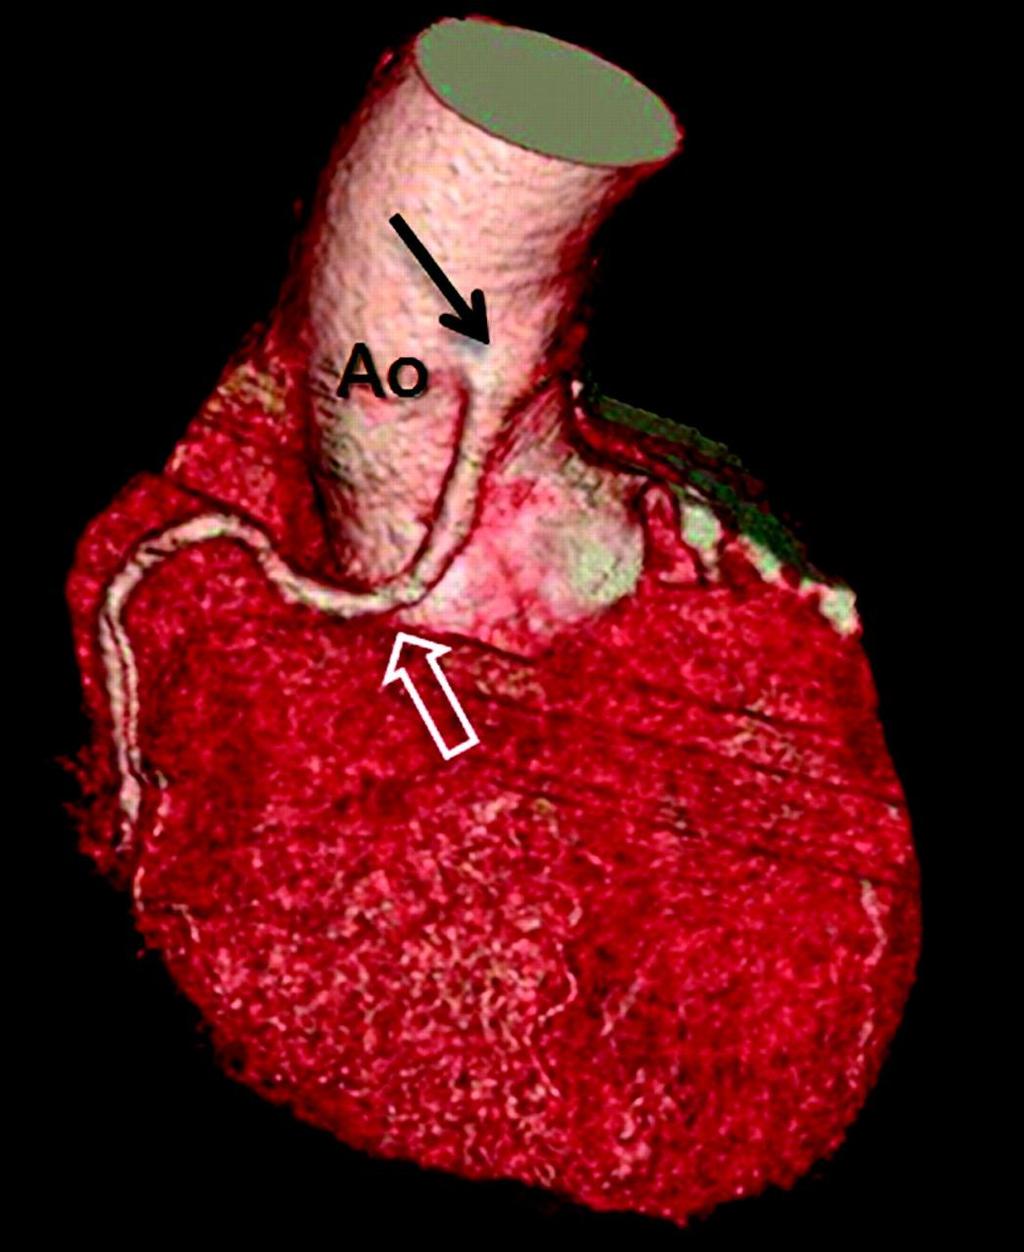 al. Heart